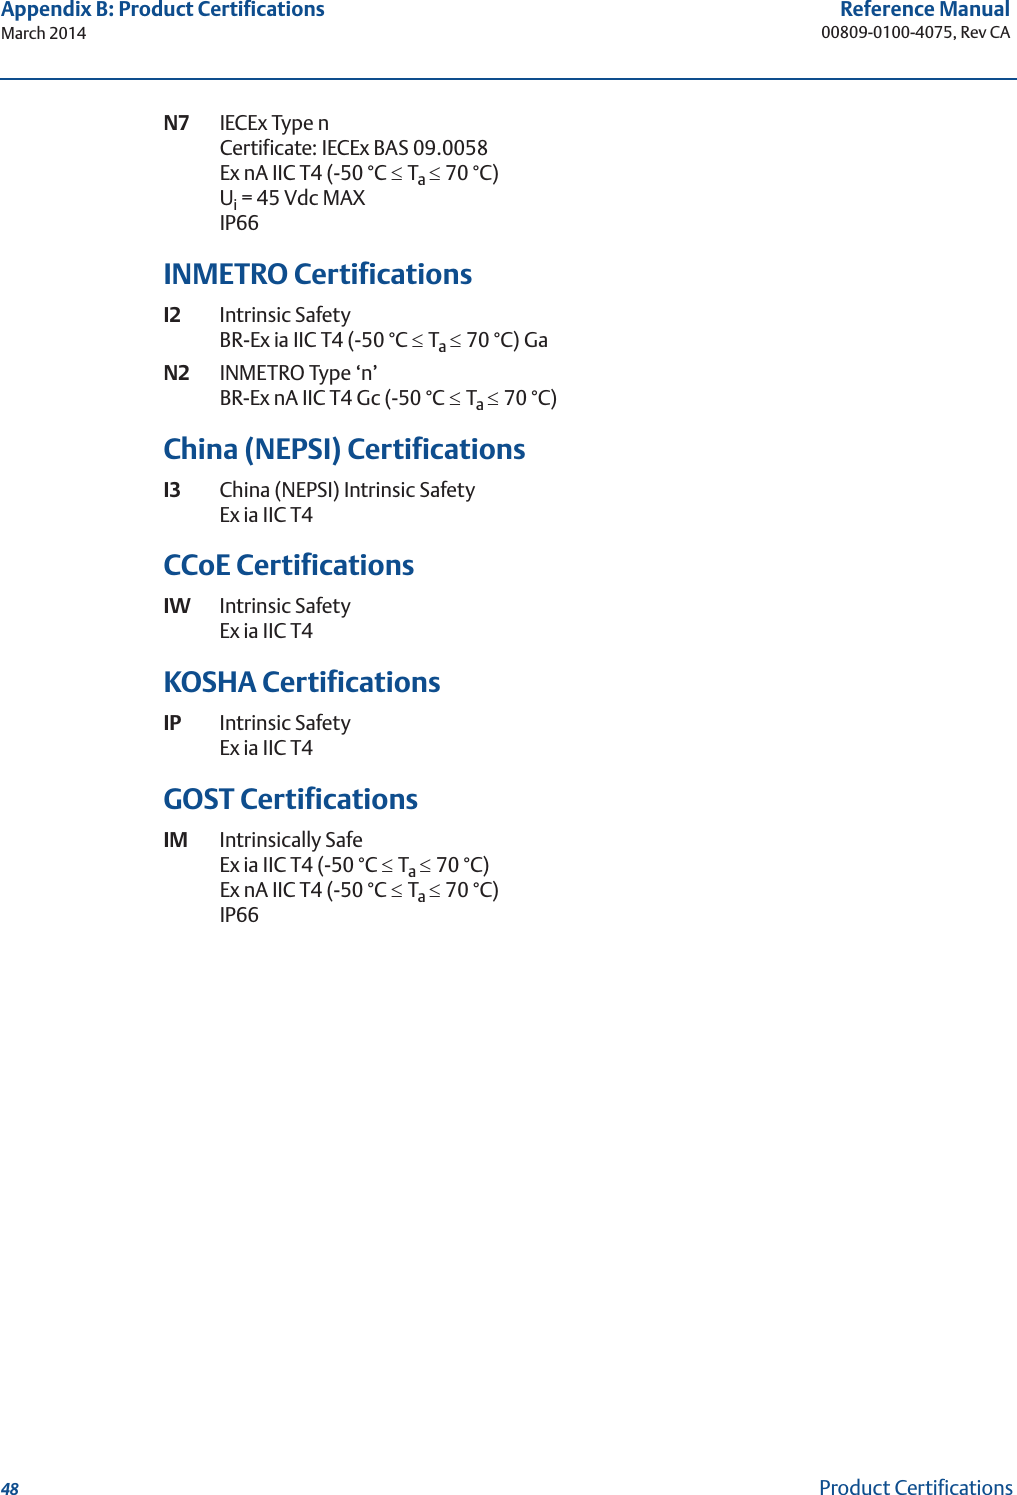 48Reference Manual00809-0100-4075, Rev CAAppendix B: Product CertificationsMarch 2014Product CertificationsN7  IECEx Type nCertificate: IECEx BAS 09.0058Ex nA IIC T4 (-50 °C dTa d70 °C)Ui = 45 Vdc MAXIP66INMETRO CertificationsI2 Intrinsic SafetyBR-Ex ia IIC T4 (-50 °C dTa d70 °C) GaN2 INMETRO Type ‘n’BR-Ex nA IIC T4 Gc (-50 °C dTa d70 °C) China (NEPSI) CertificationsI3 China (NEPSI) Intrinsic SafetyEx ia IIC T4CCoE CertificationsIW Intrinsic SafetyEx ia IIC T4KOSHA CertificationsIP Intrinsic SafetyEx ia IIC T4GOST CertificationsIM Intrinsically SafeEx ia IIC T4 (-50 °C dTa d70 °C) Ex nA IIC T4 (-50 °C dTa d70 °C) IP66